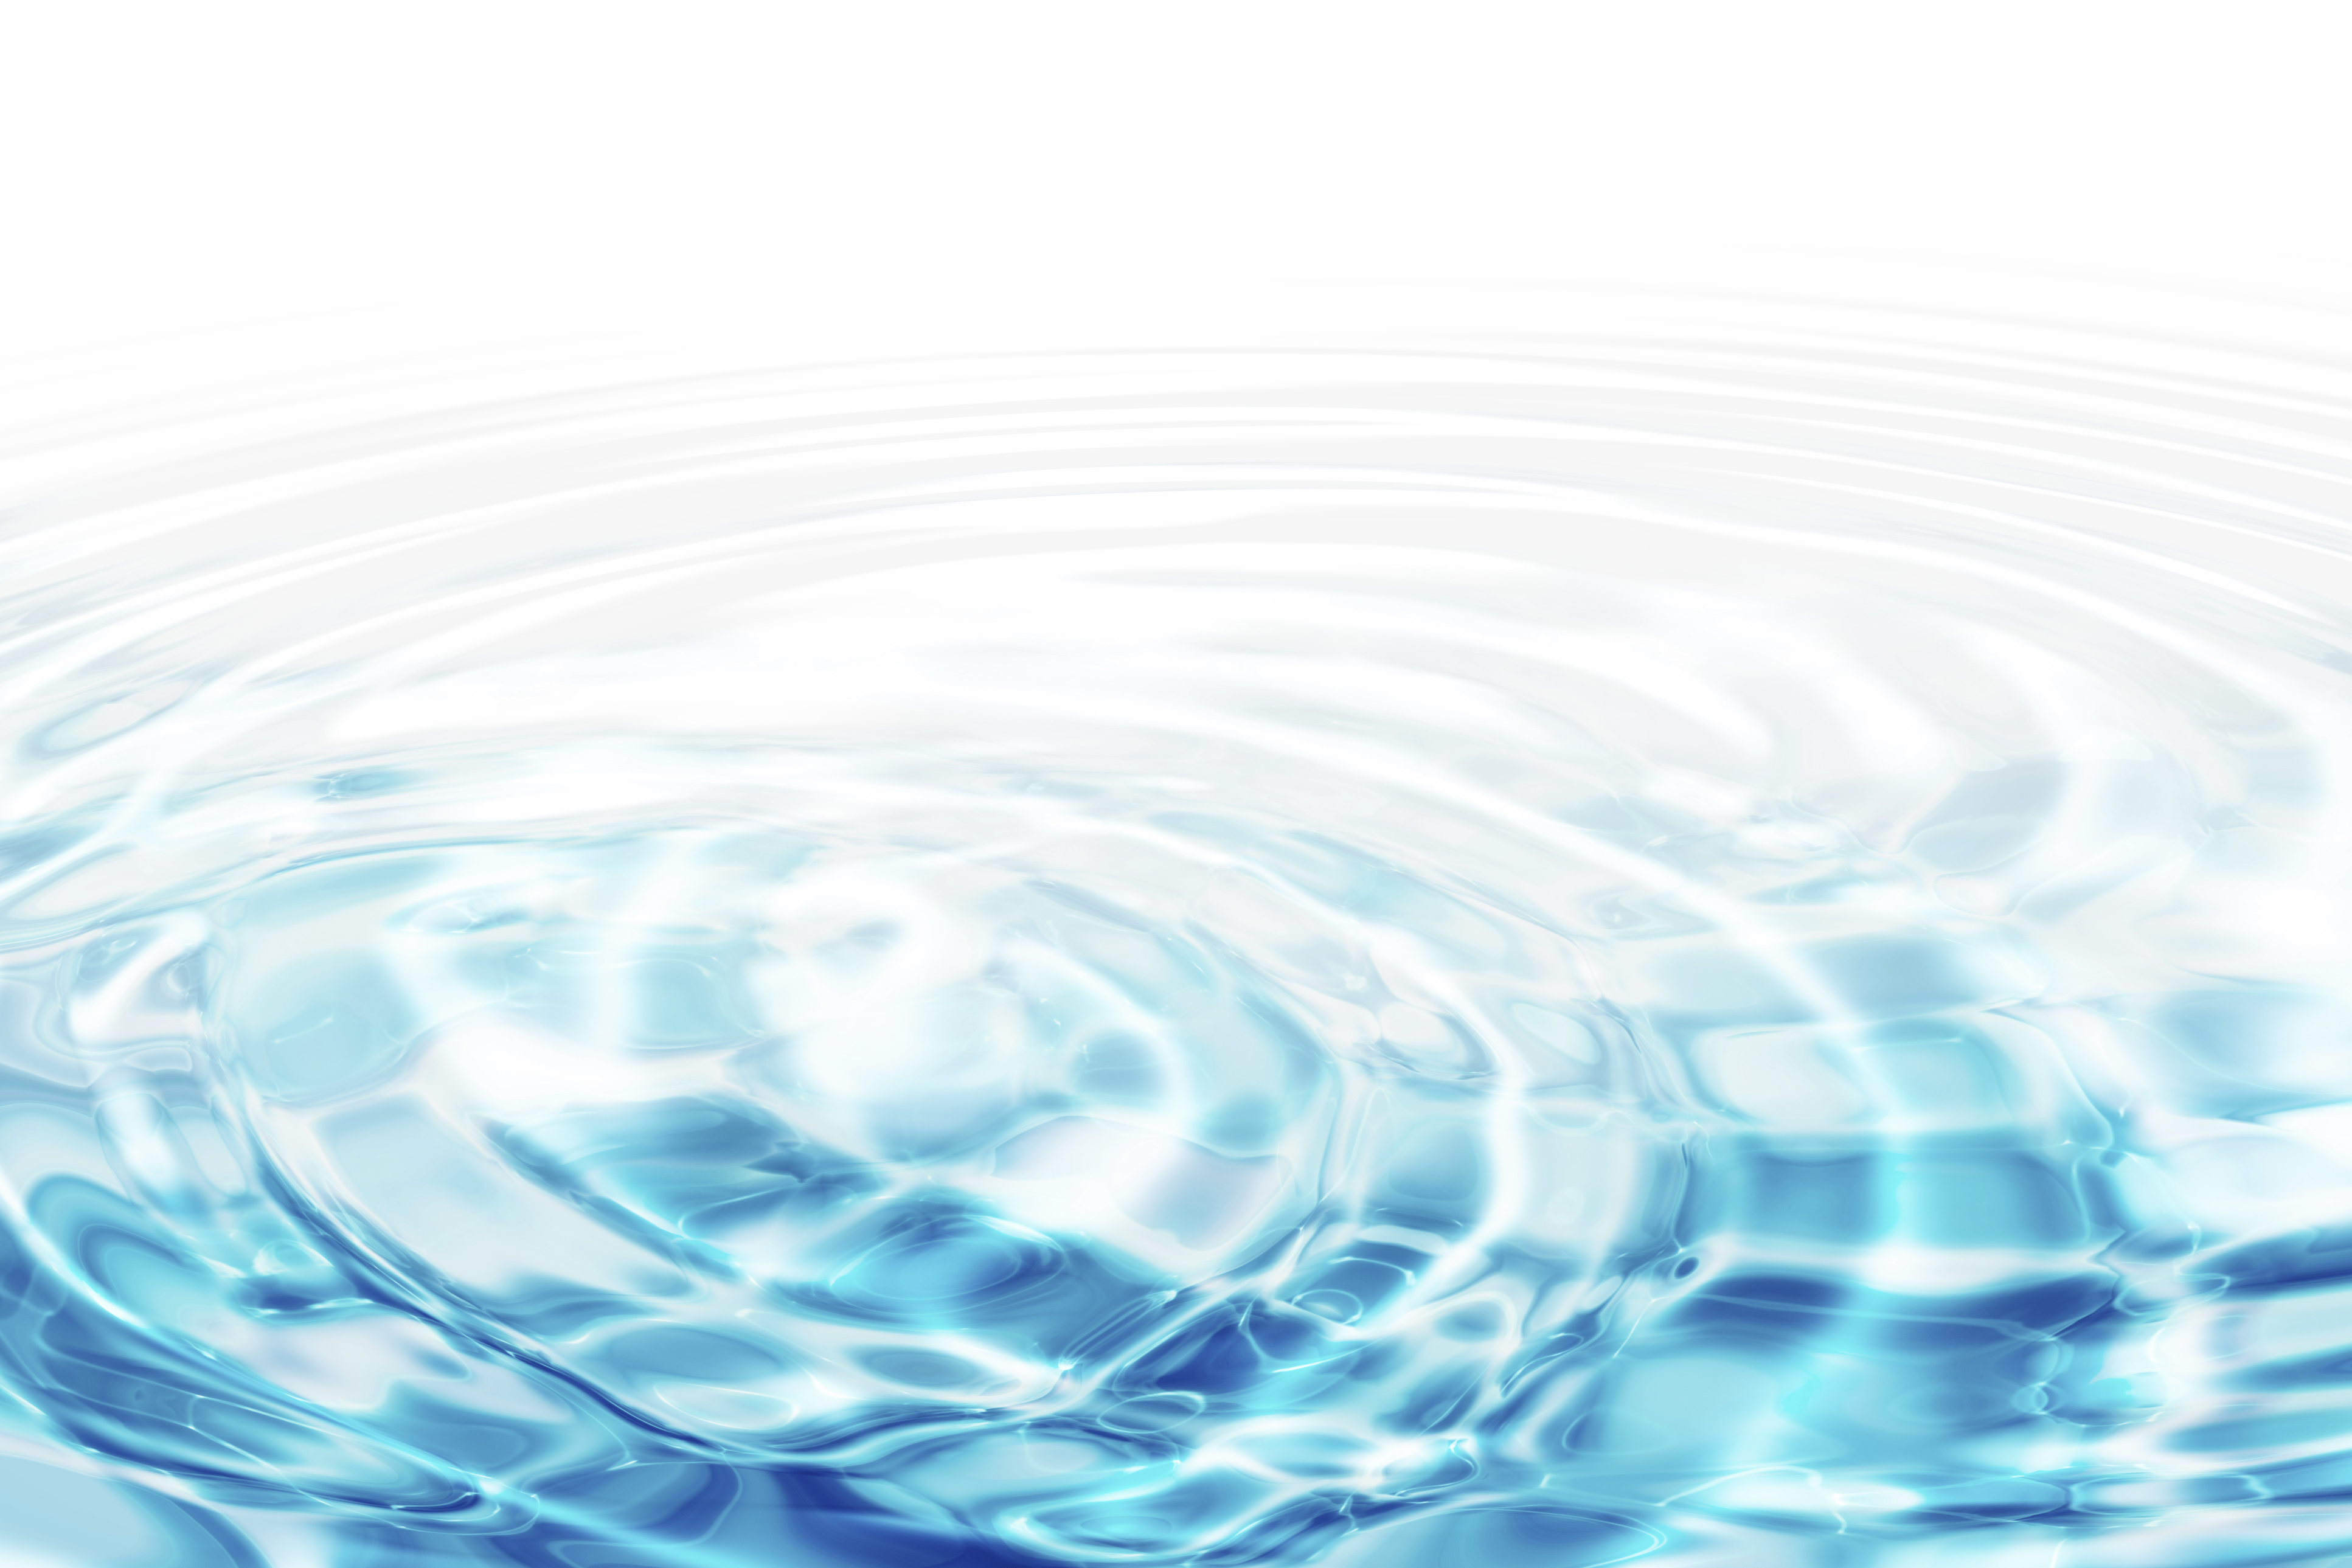 allqua water turquoise ripple - allqua water